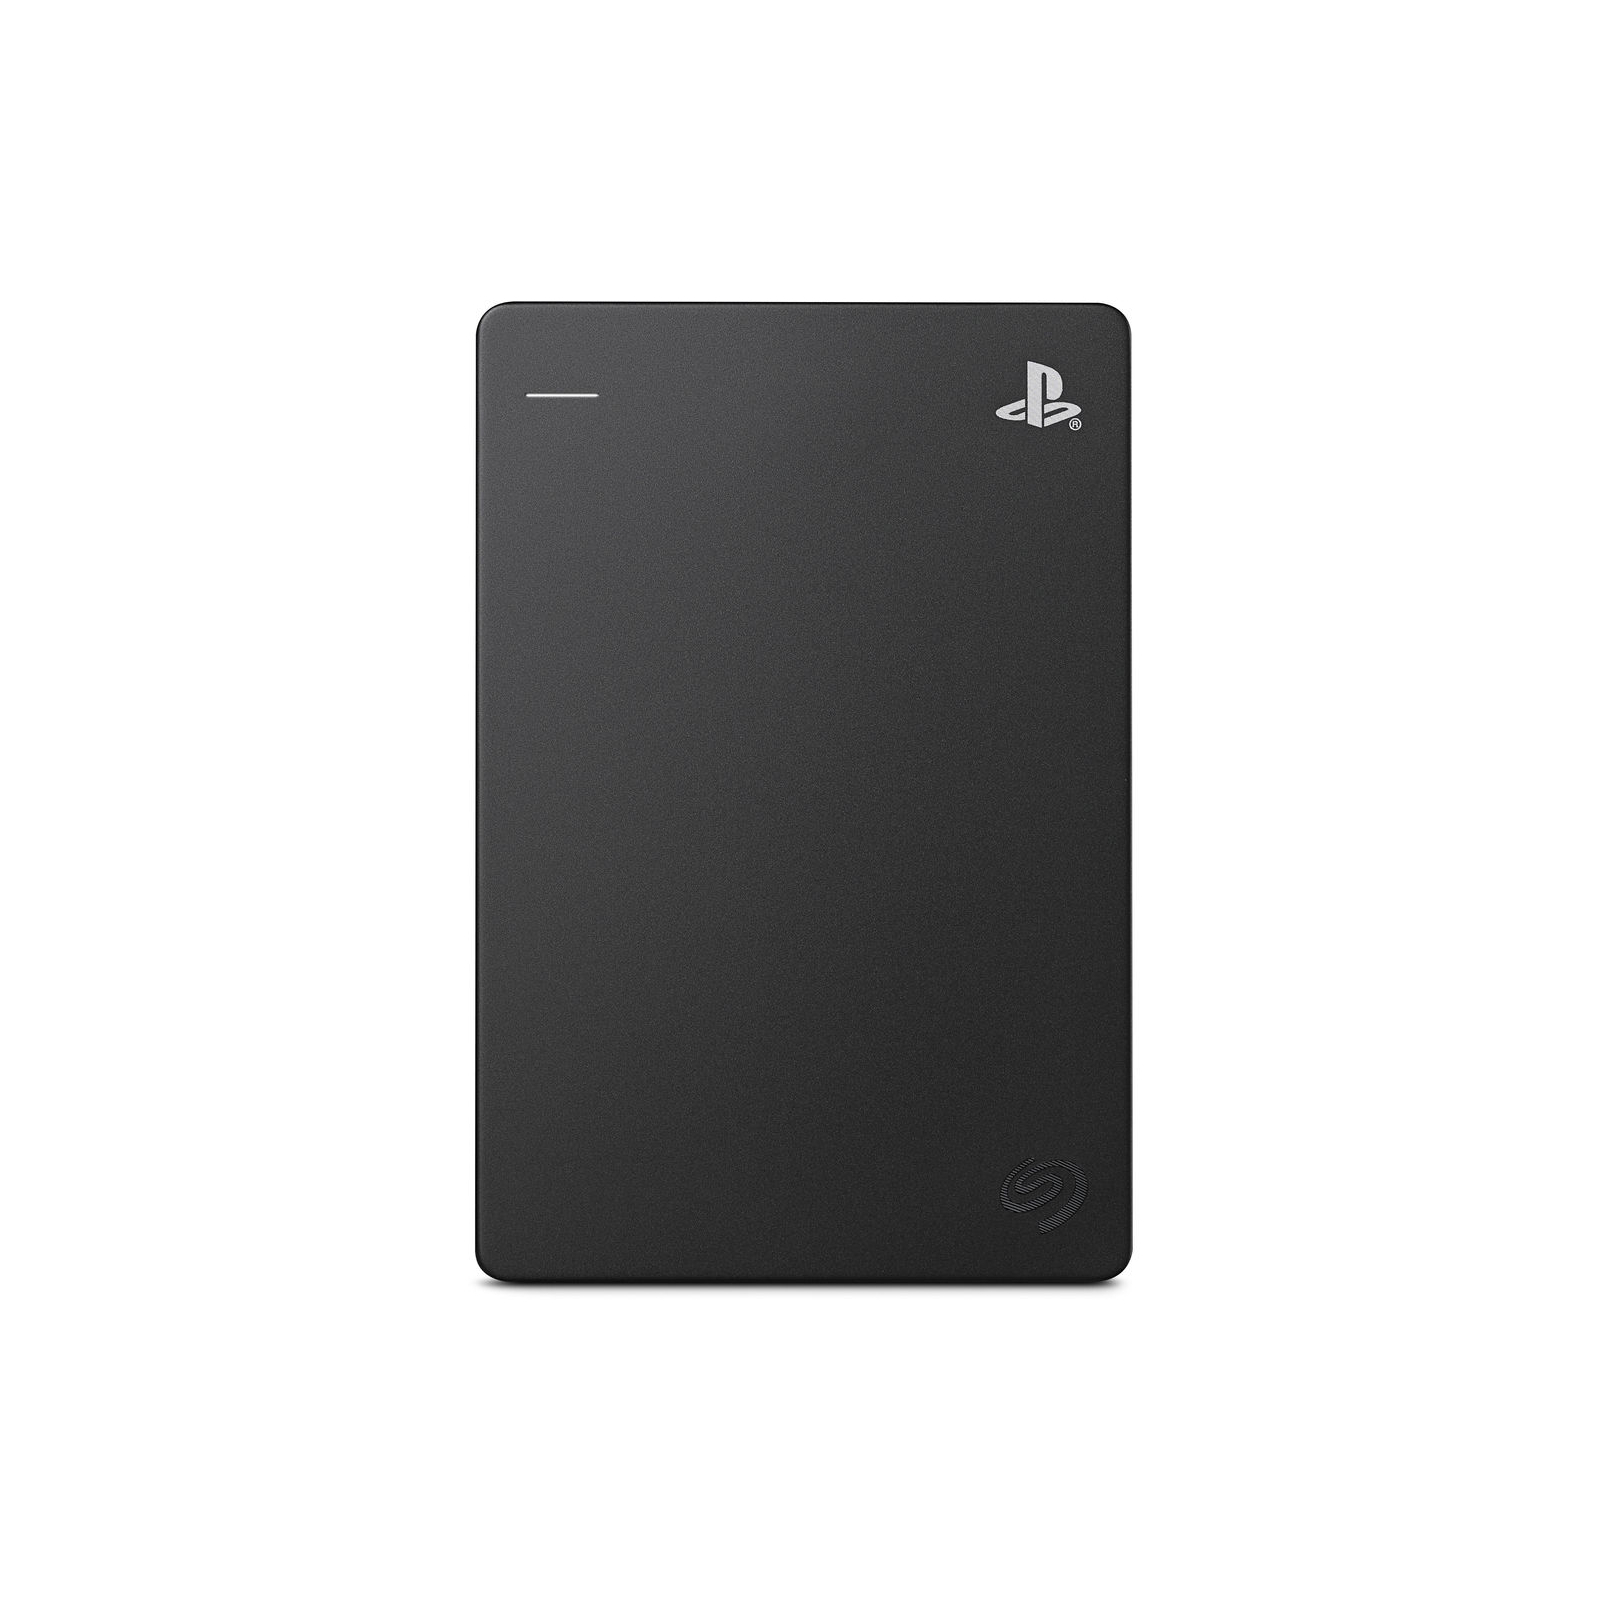 Внешний жесткий диск 2.5" 1TB Game Drive for PlayStation 4 Seagate (STGD1000100) изображение 2